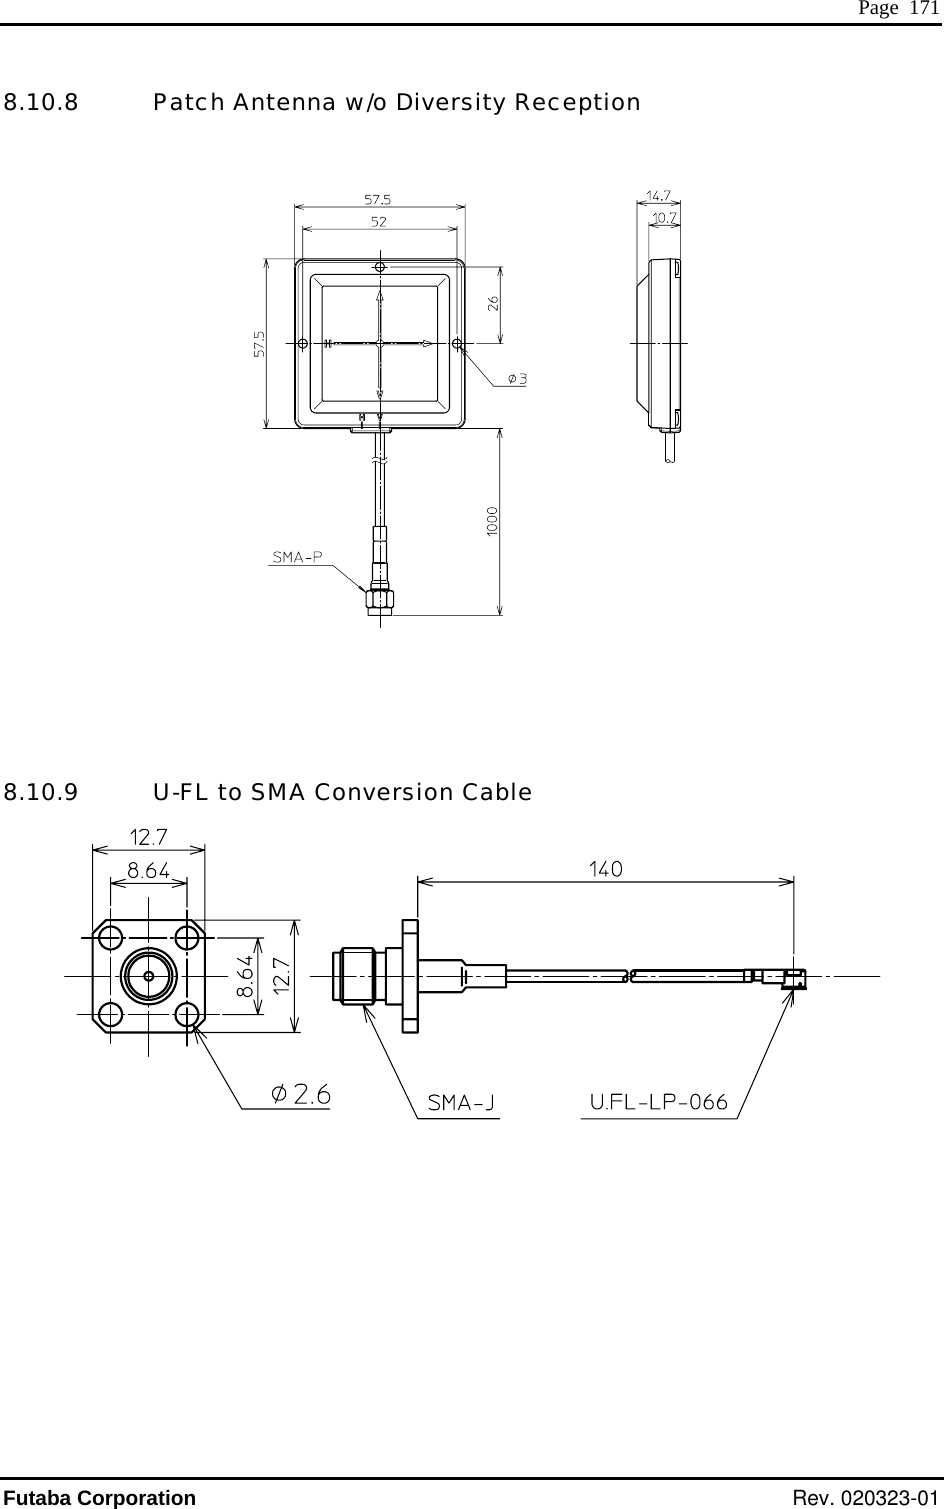  Page  171 8.10.8   Patch Antenna w/o Diversity Reception      .10.9   U-FL to SMA Conversion Cable 8  Futaba Corporation Rev. 020323-01 